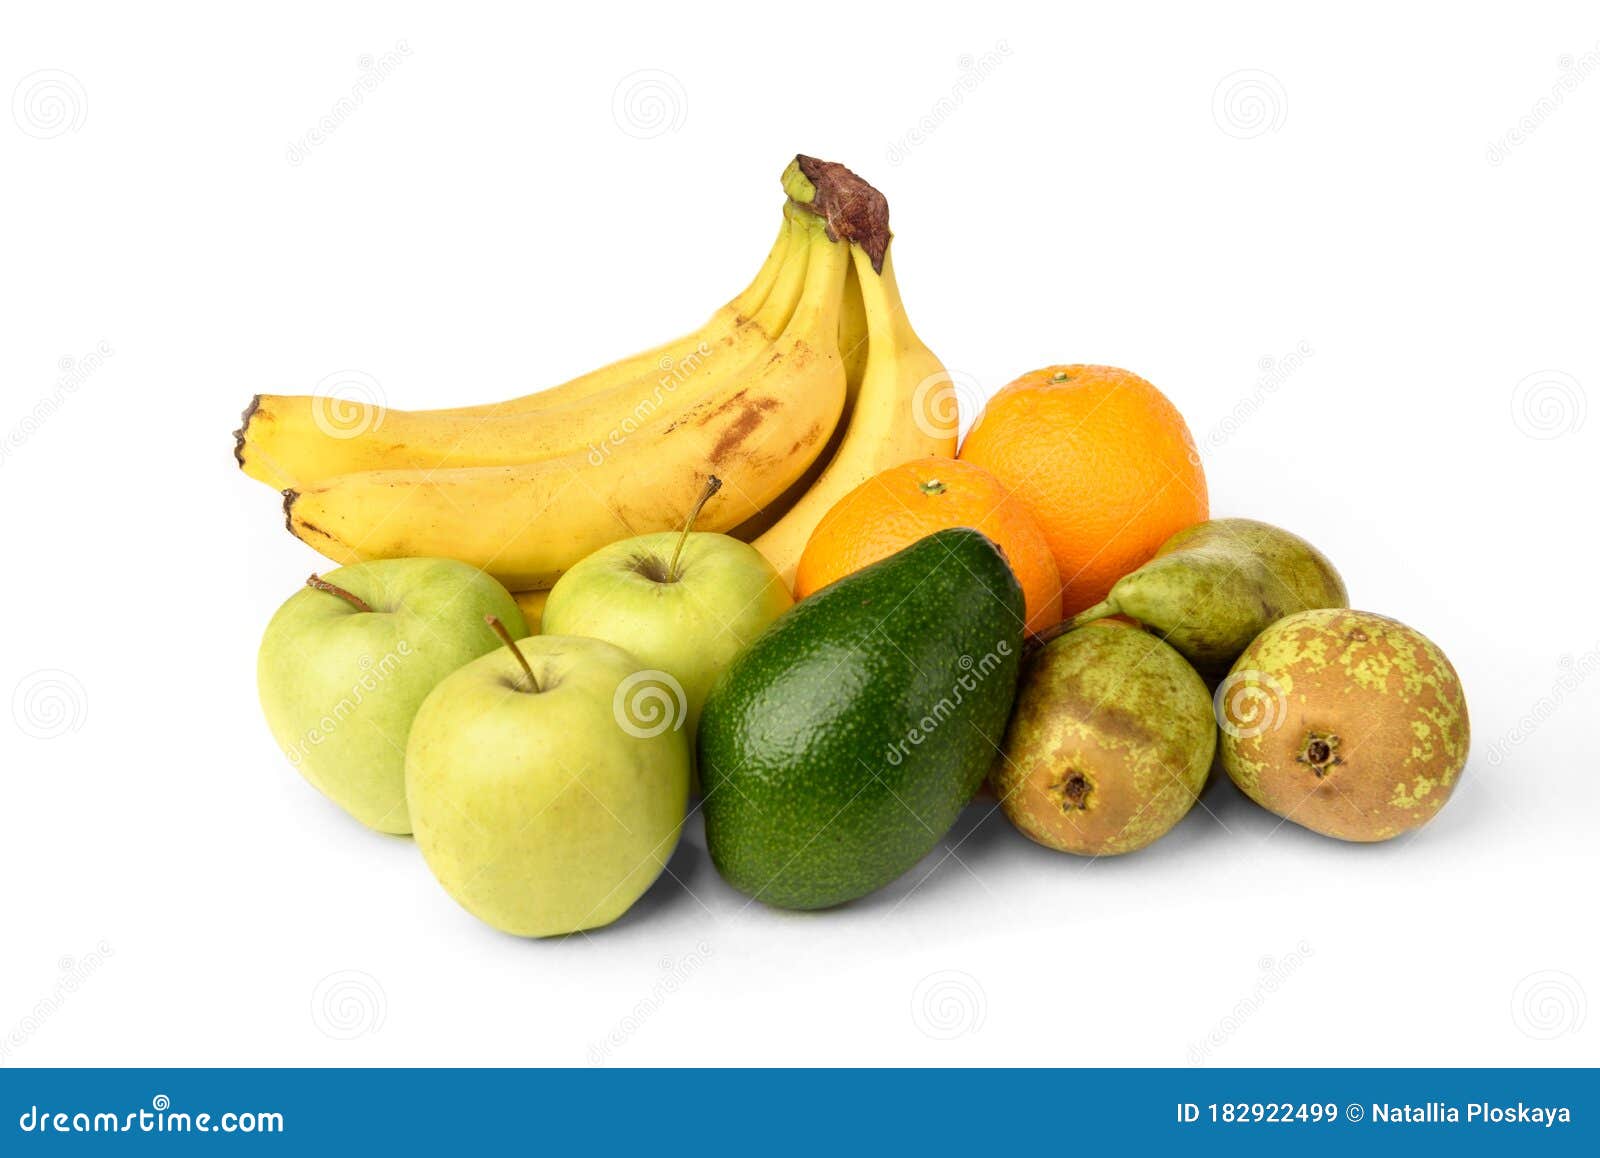 Banana Orange Avocado Pear And Green Apple Isolated On White